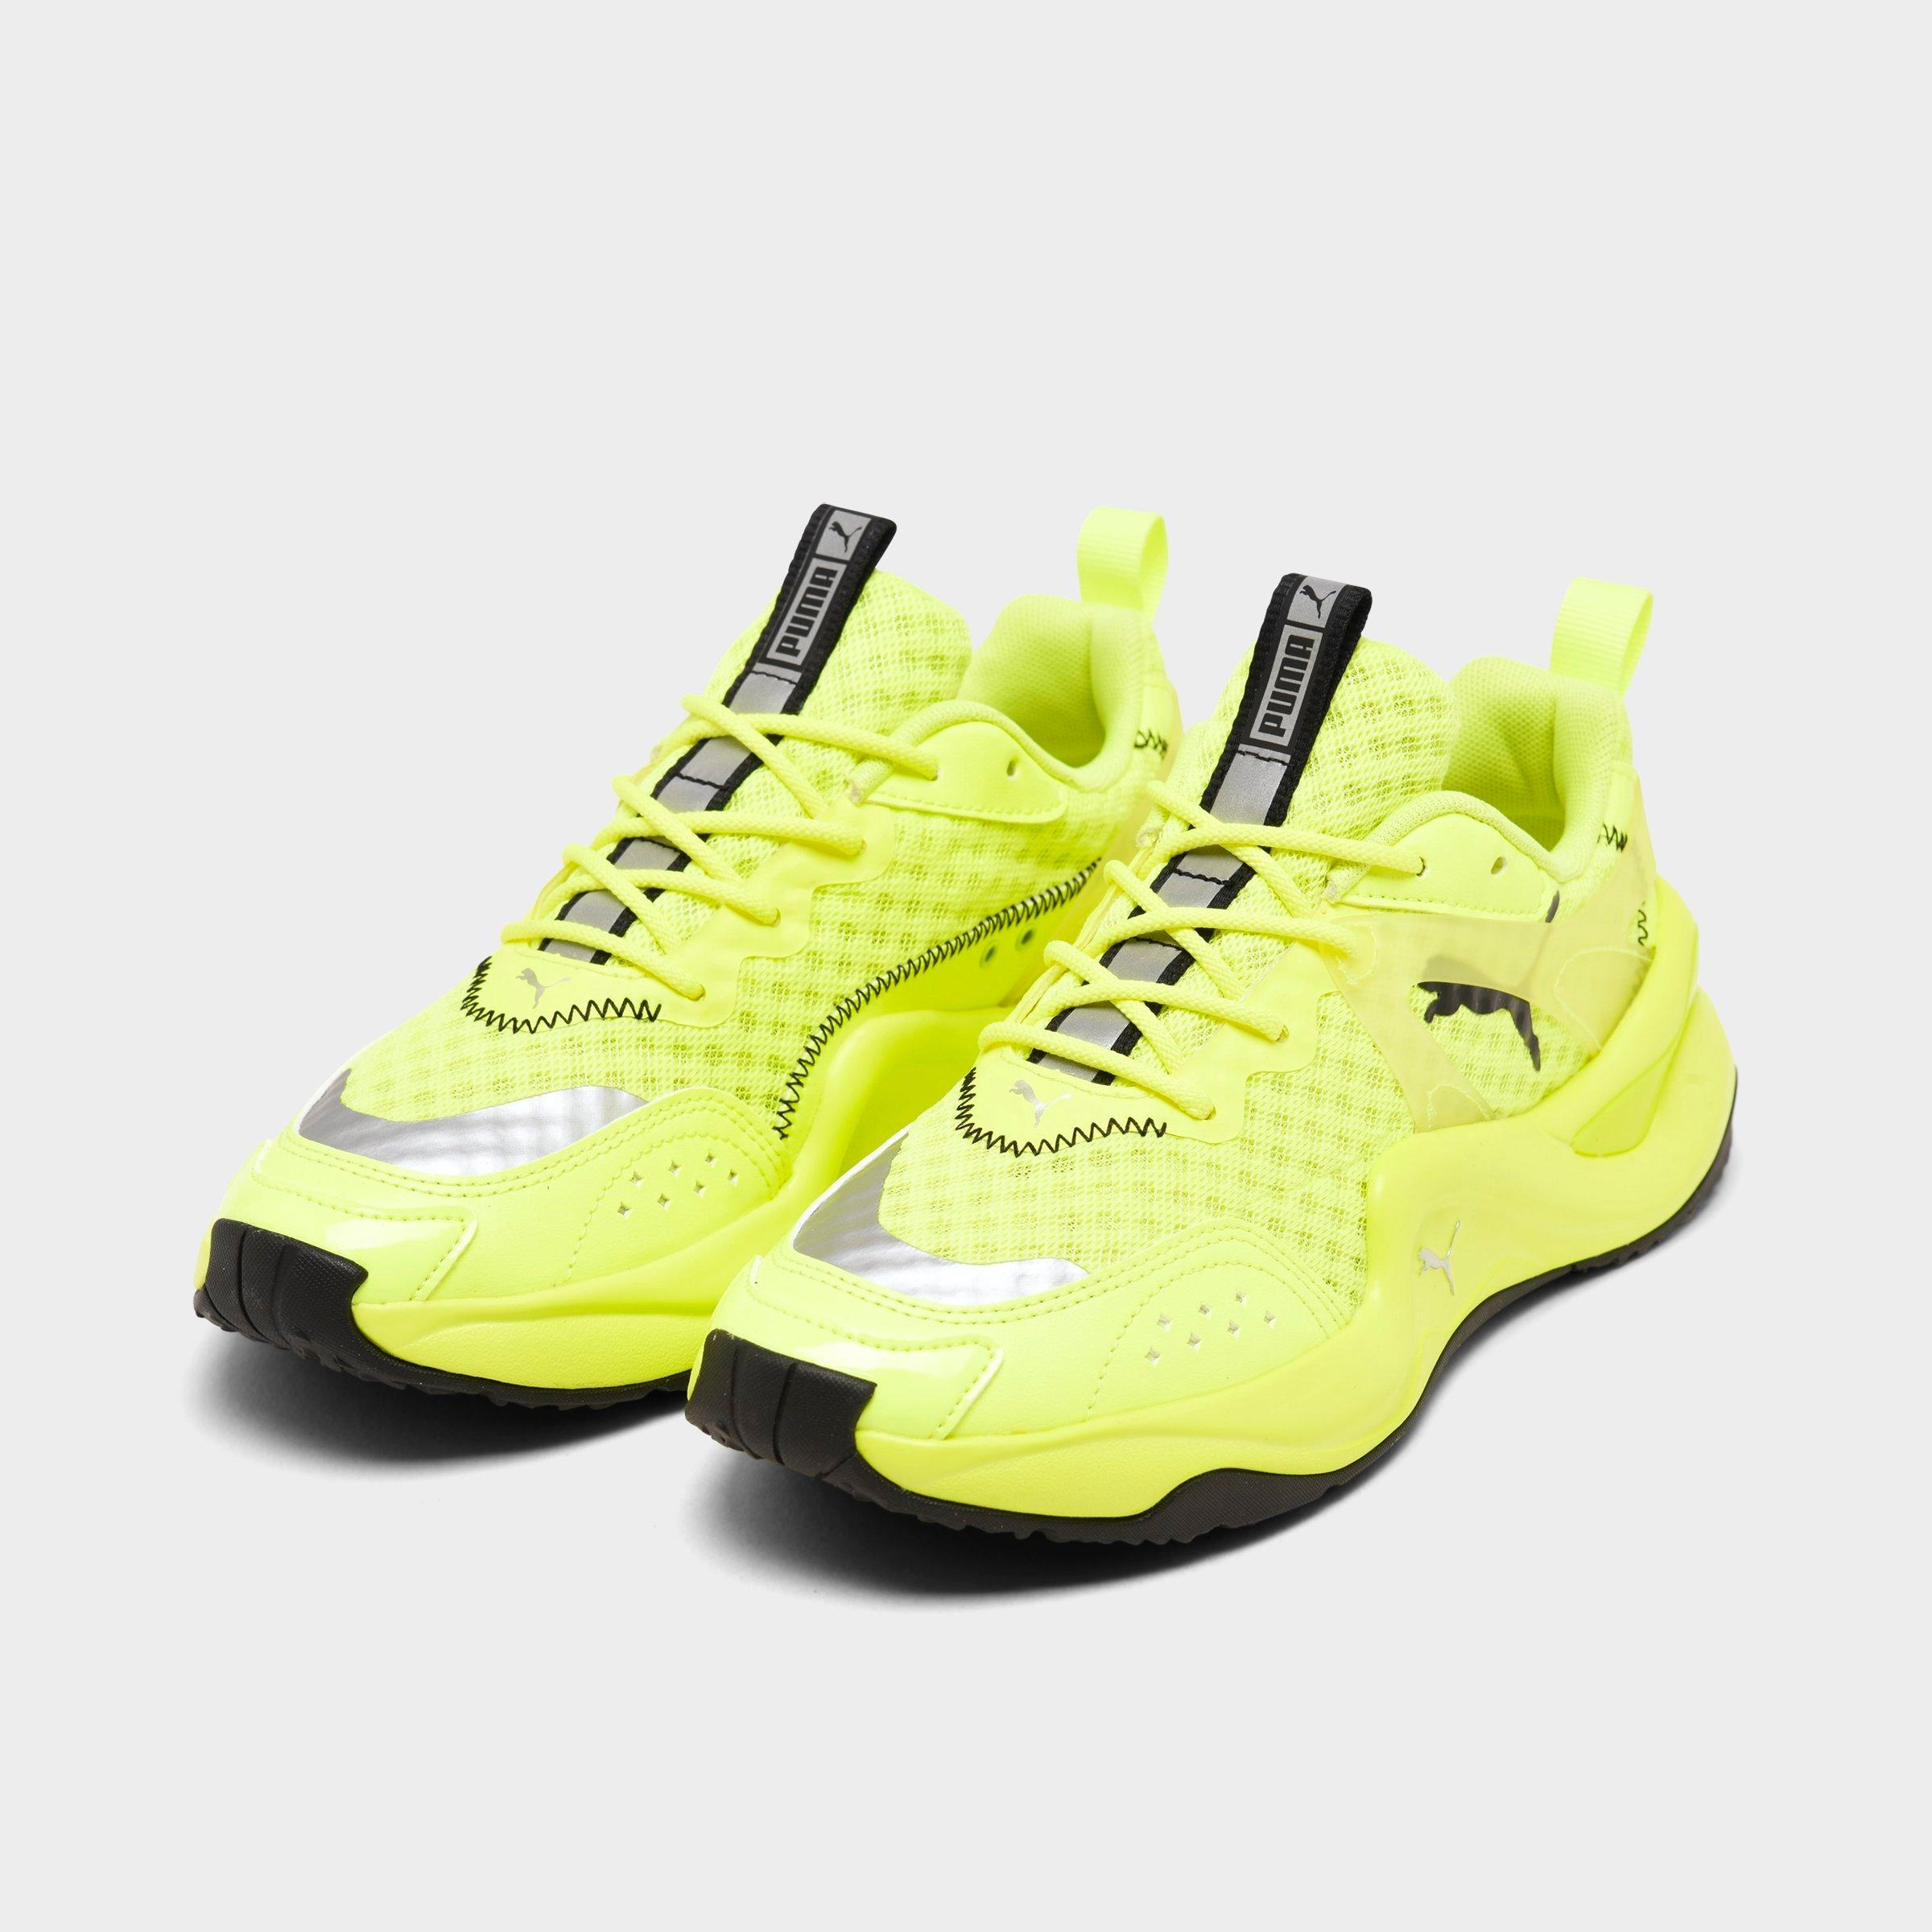 neon yellow puma shoes